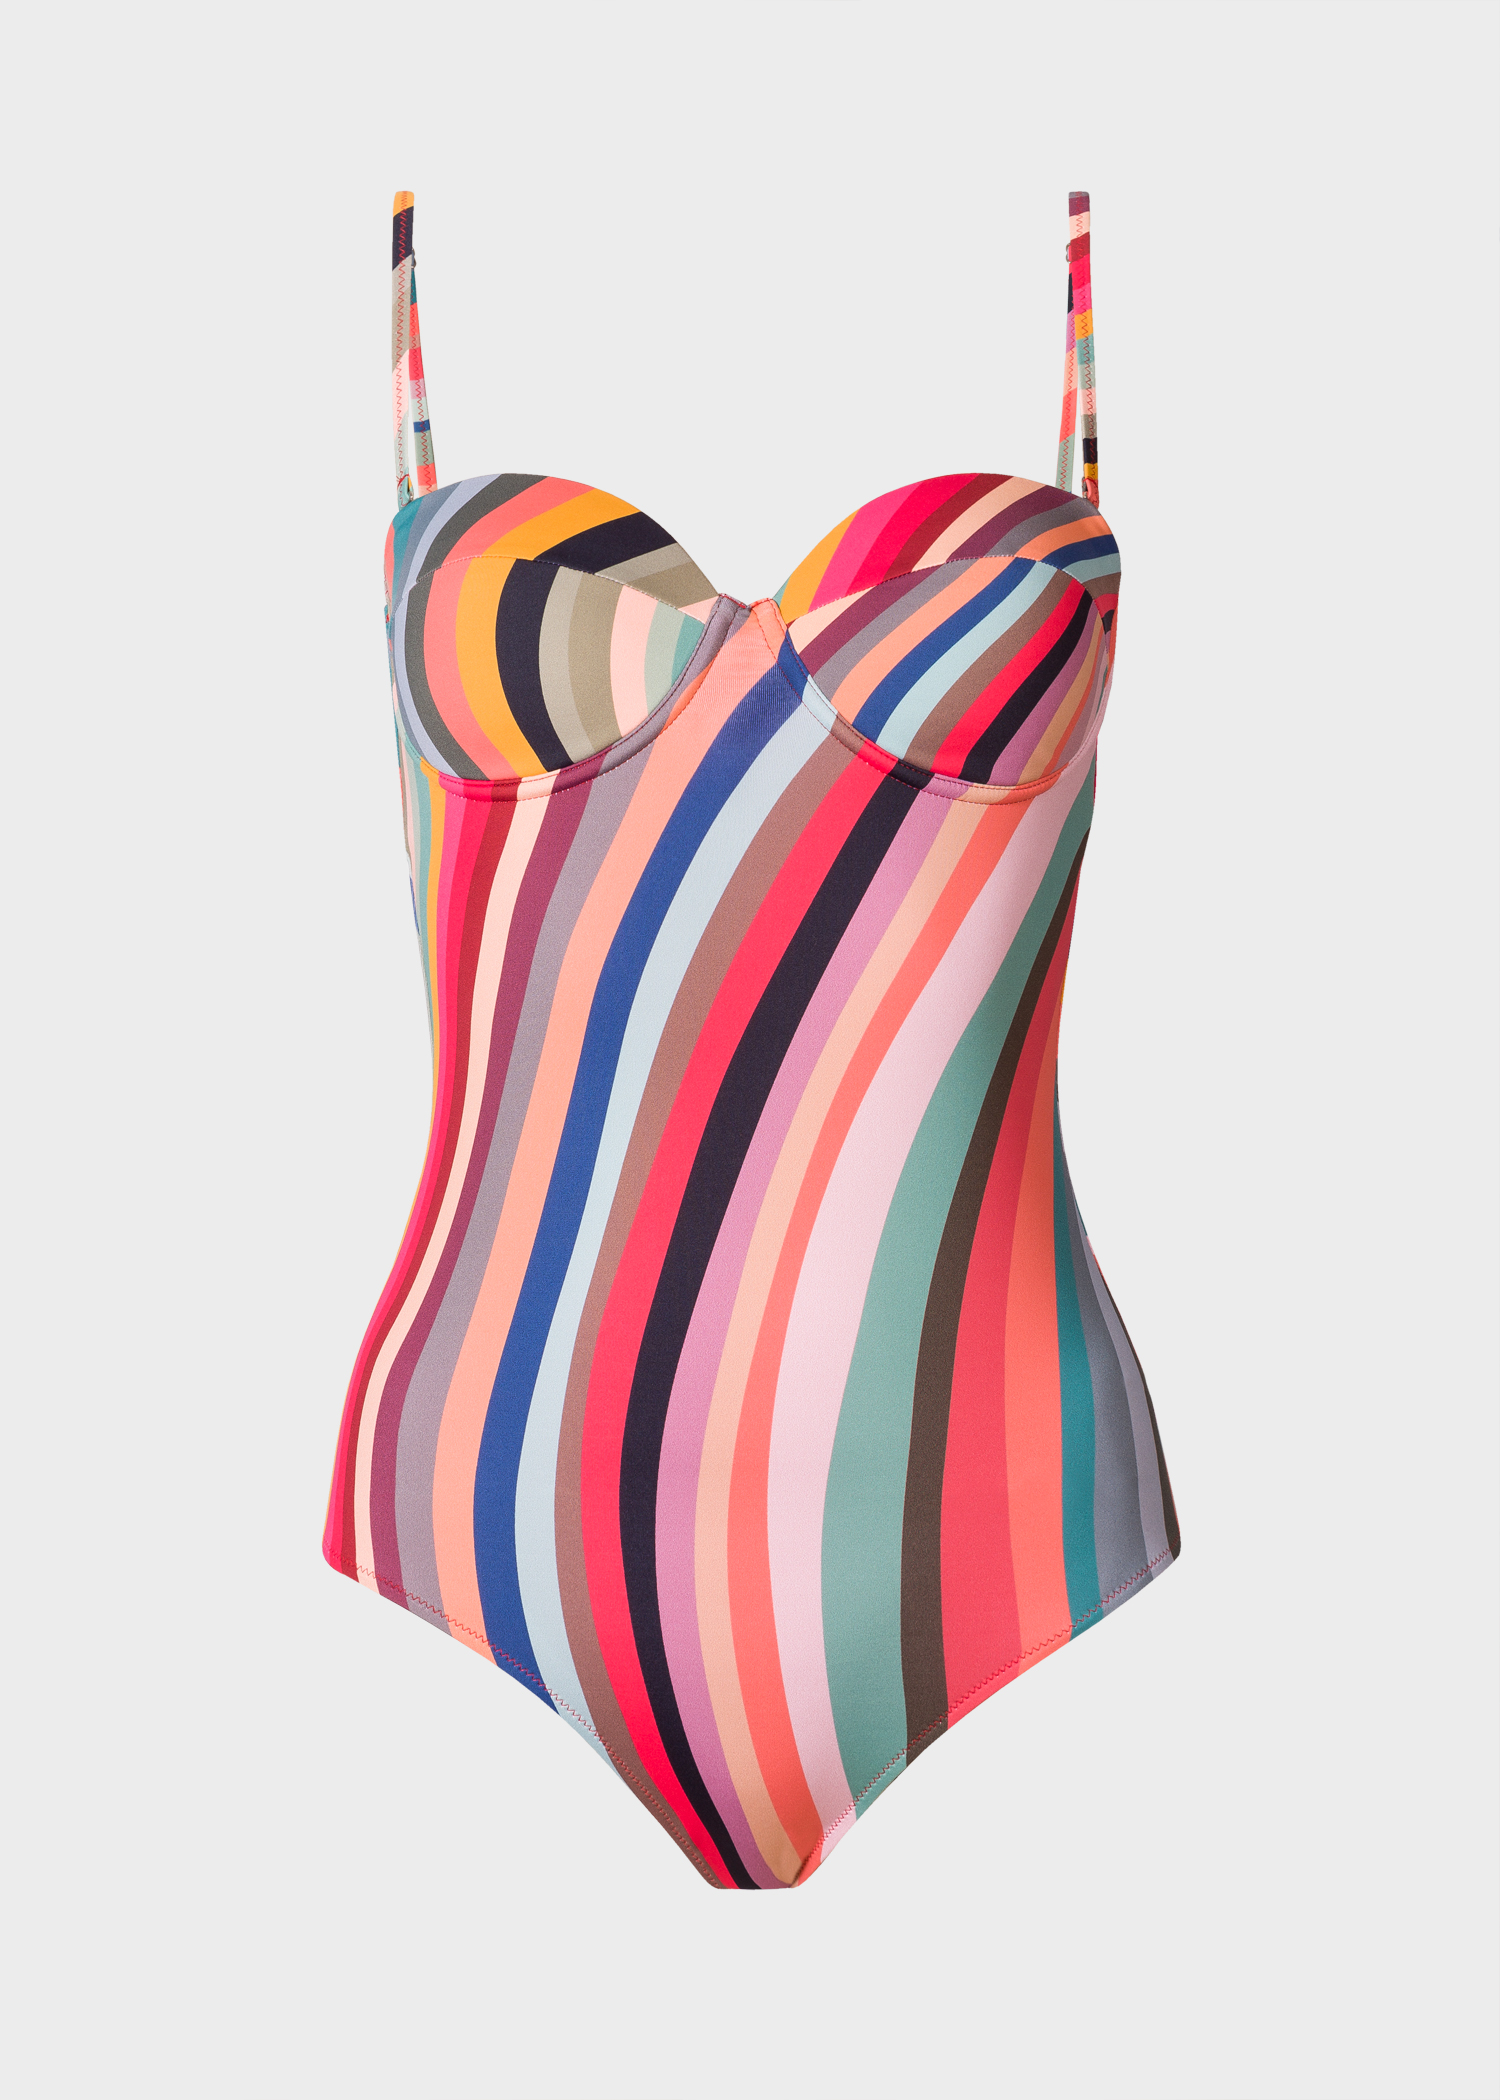 Product View - Women's 'Swirl' Print Wrap Bandeau Swimsuit Paul Smith